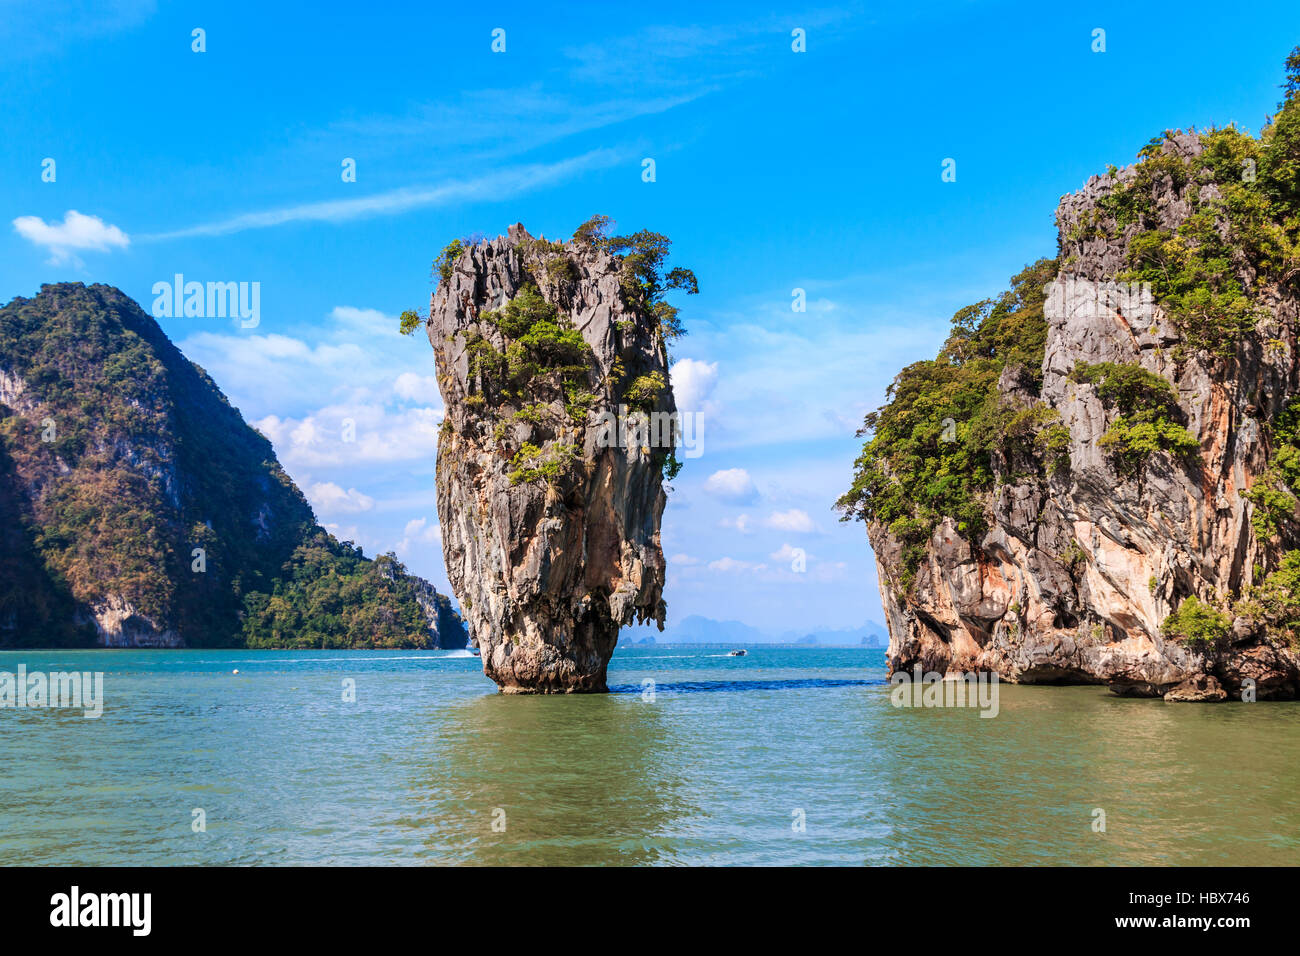 Thailandia, Krabi. James Bond Island nella Baia di Phang Nga. Foto Stock